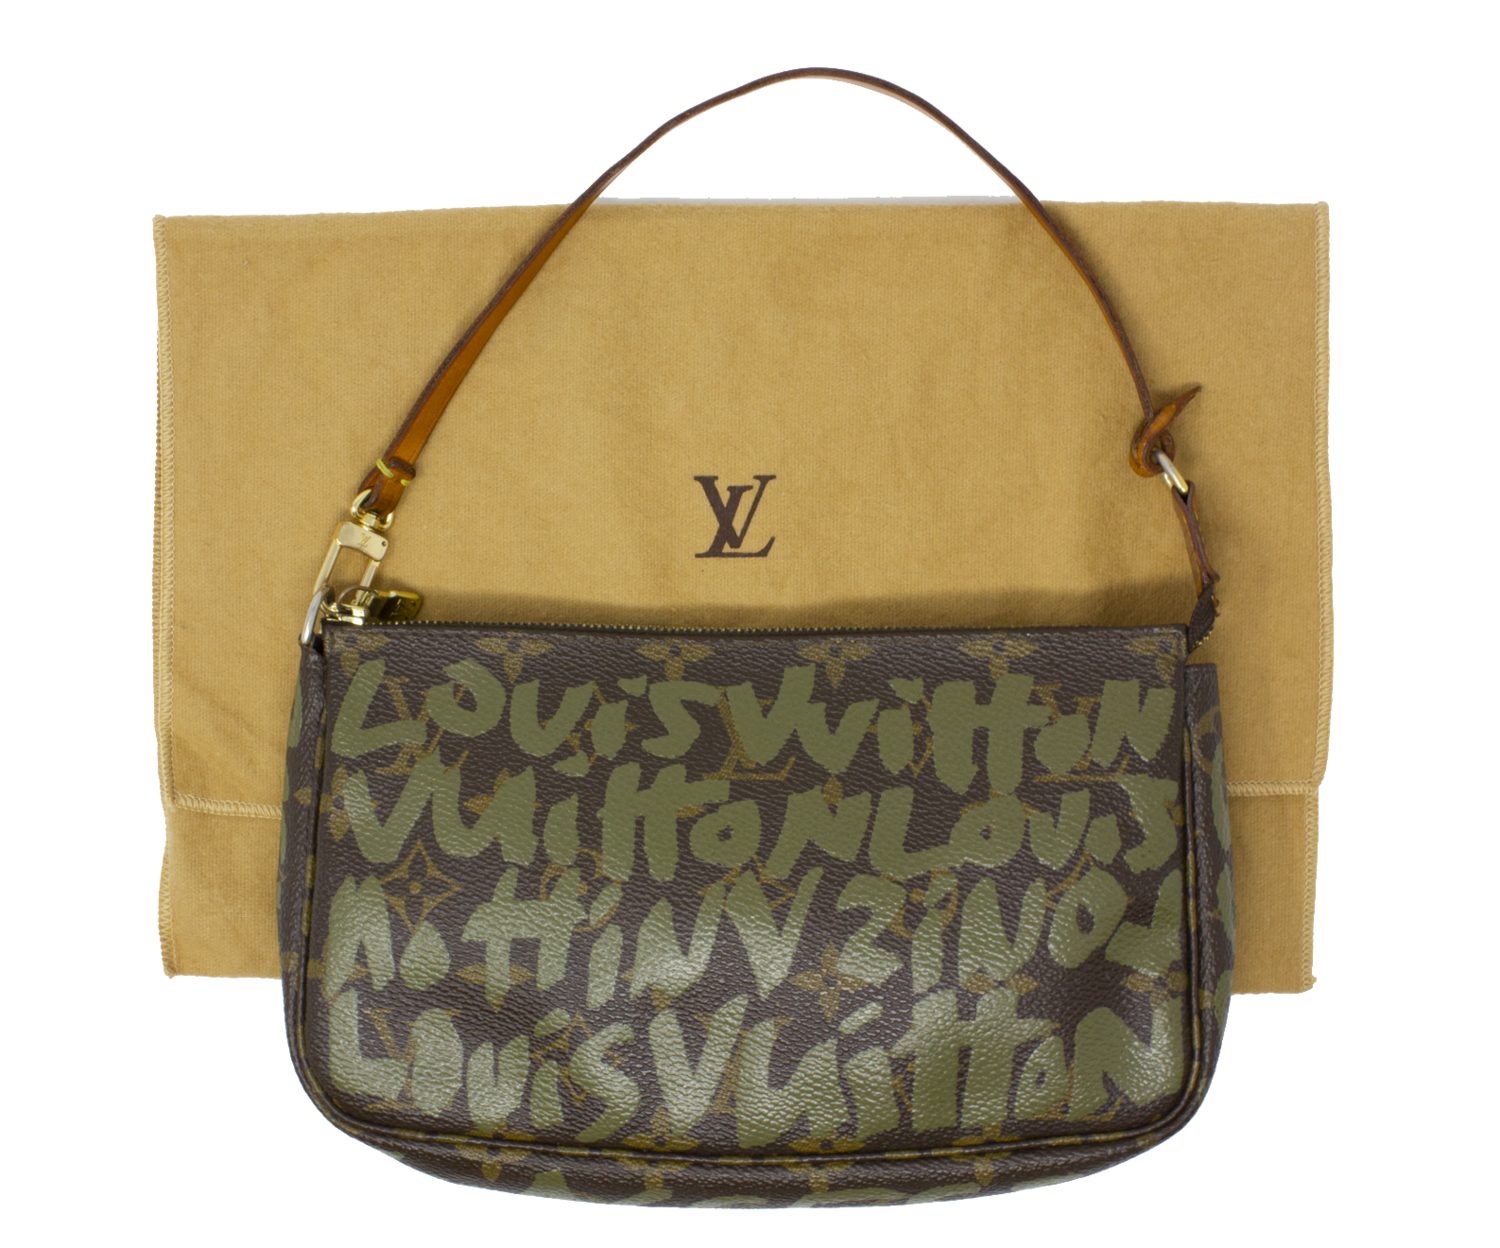 Louis Vuitton X Stephen Sprouse Graffiti Monogram Pochette - AGL1390